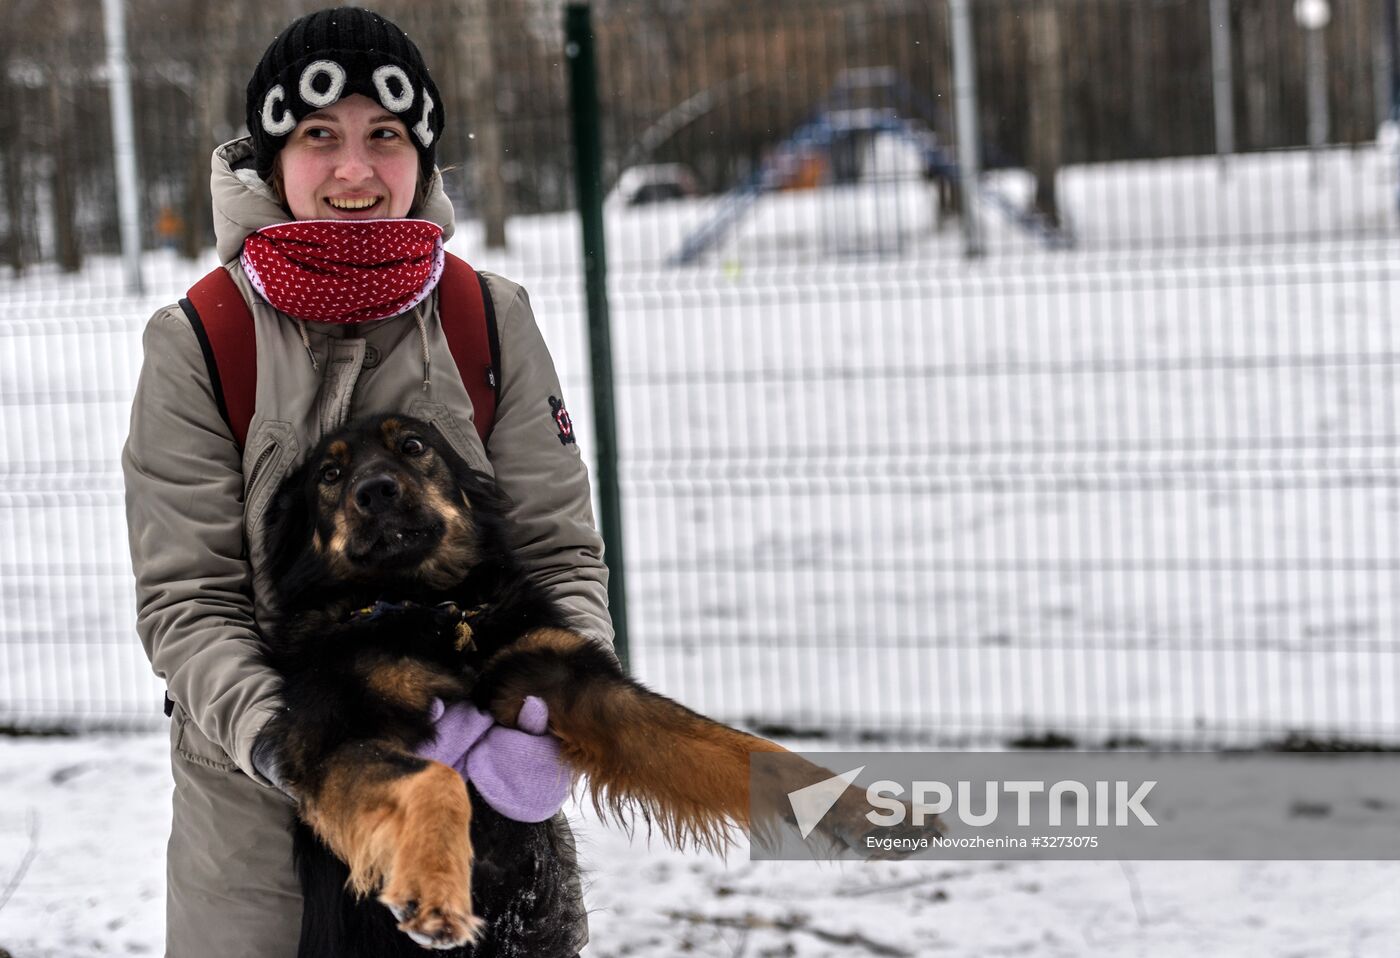 Sokolniki service dog stadium unveiled